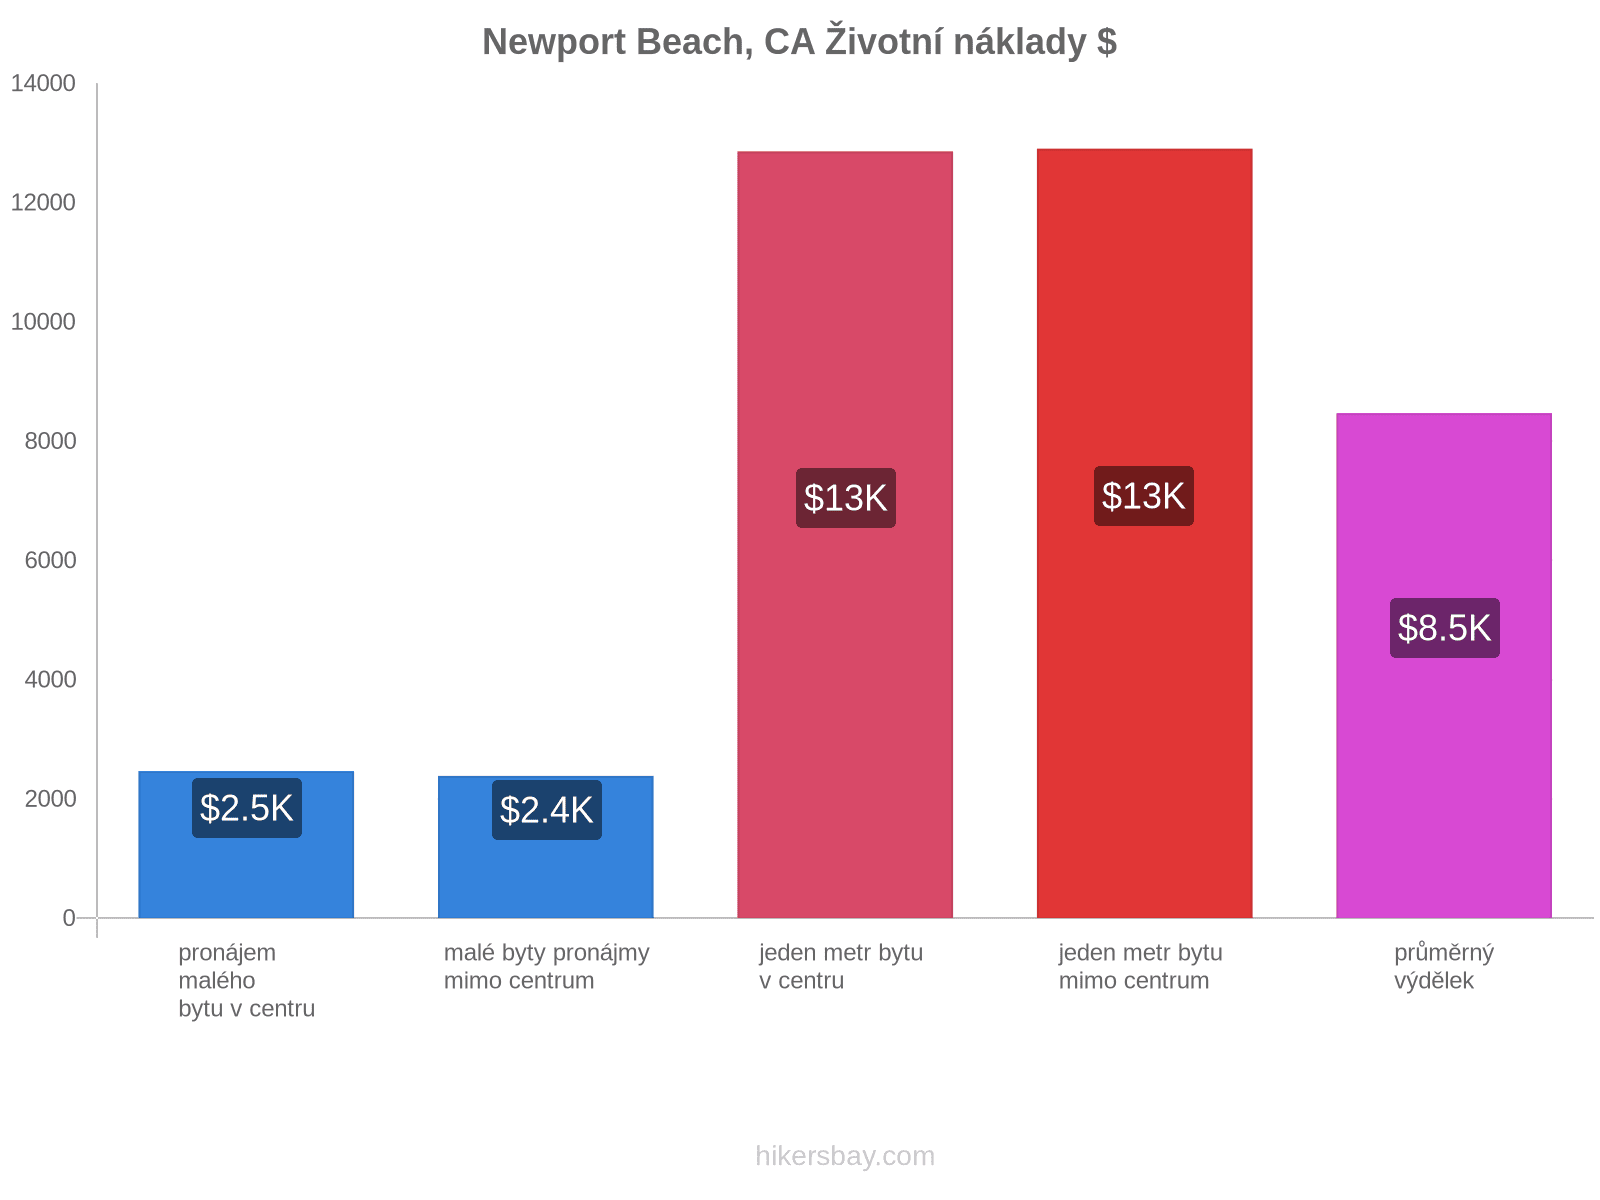 Newport Beach, CA životní náklady hikersbay.com